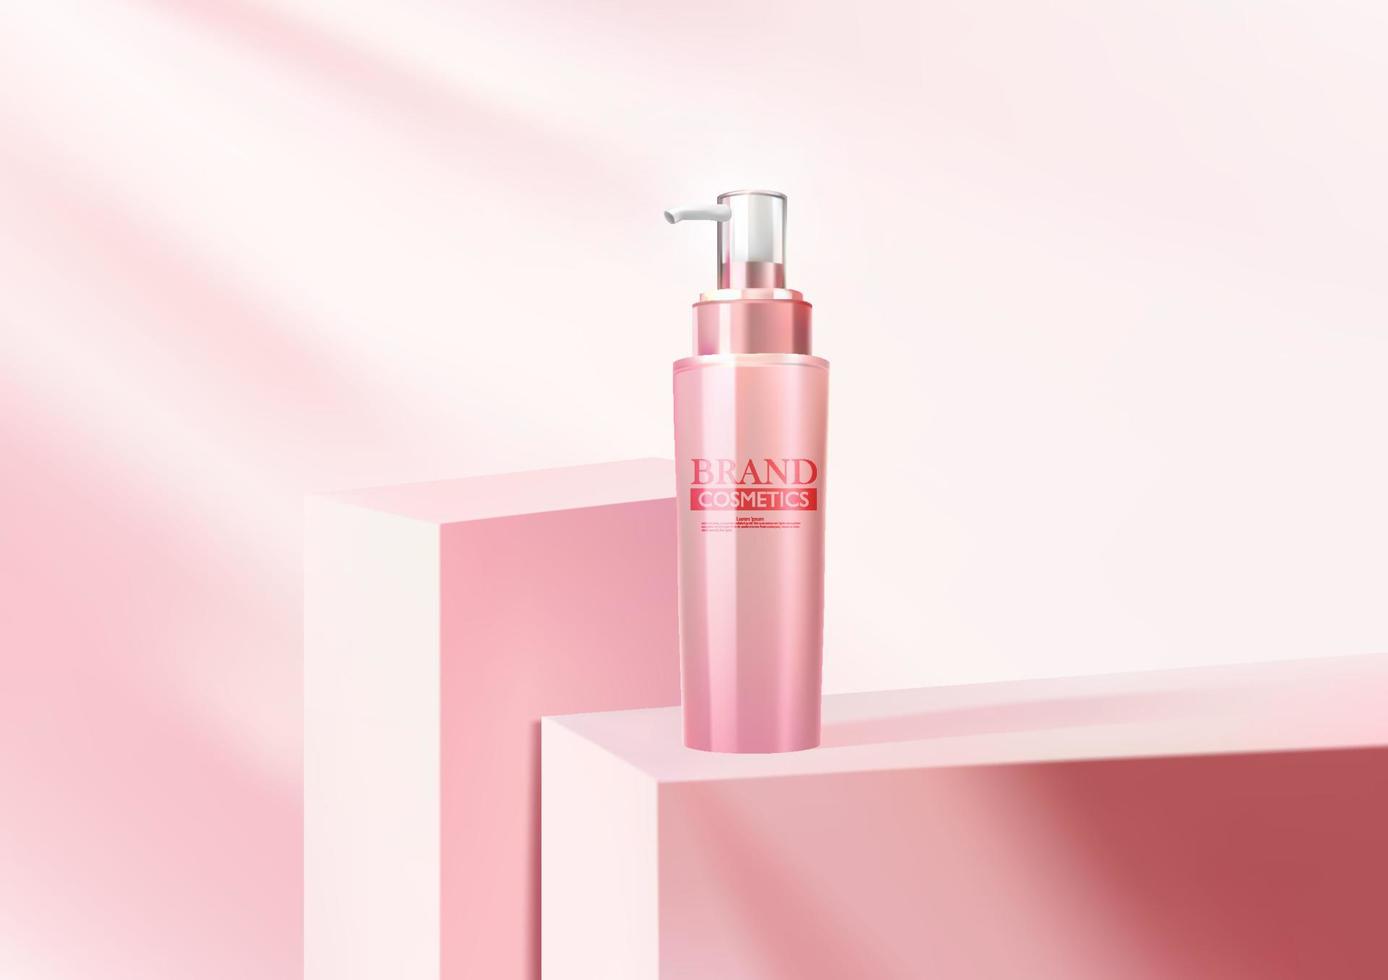 anúncios de cosméticos no palco do pódio da caixa rosa e fundo rosa. modelo de banner para beleza vetor